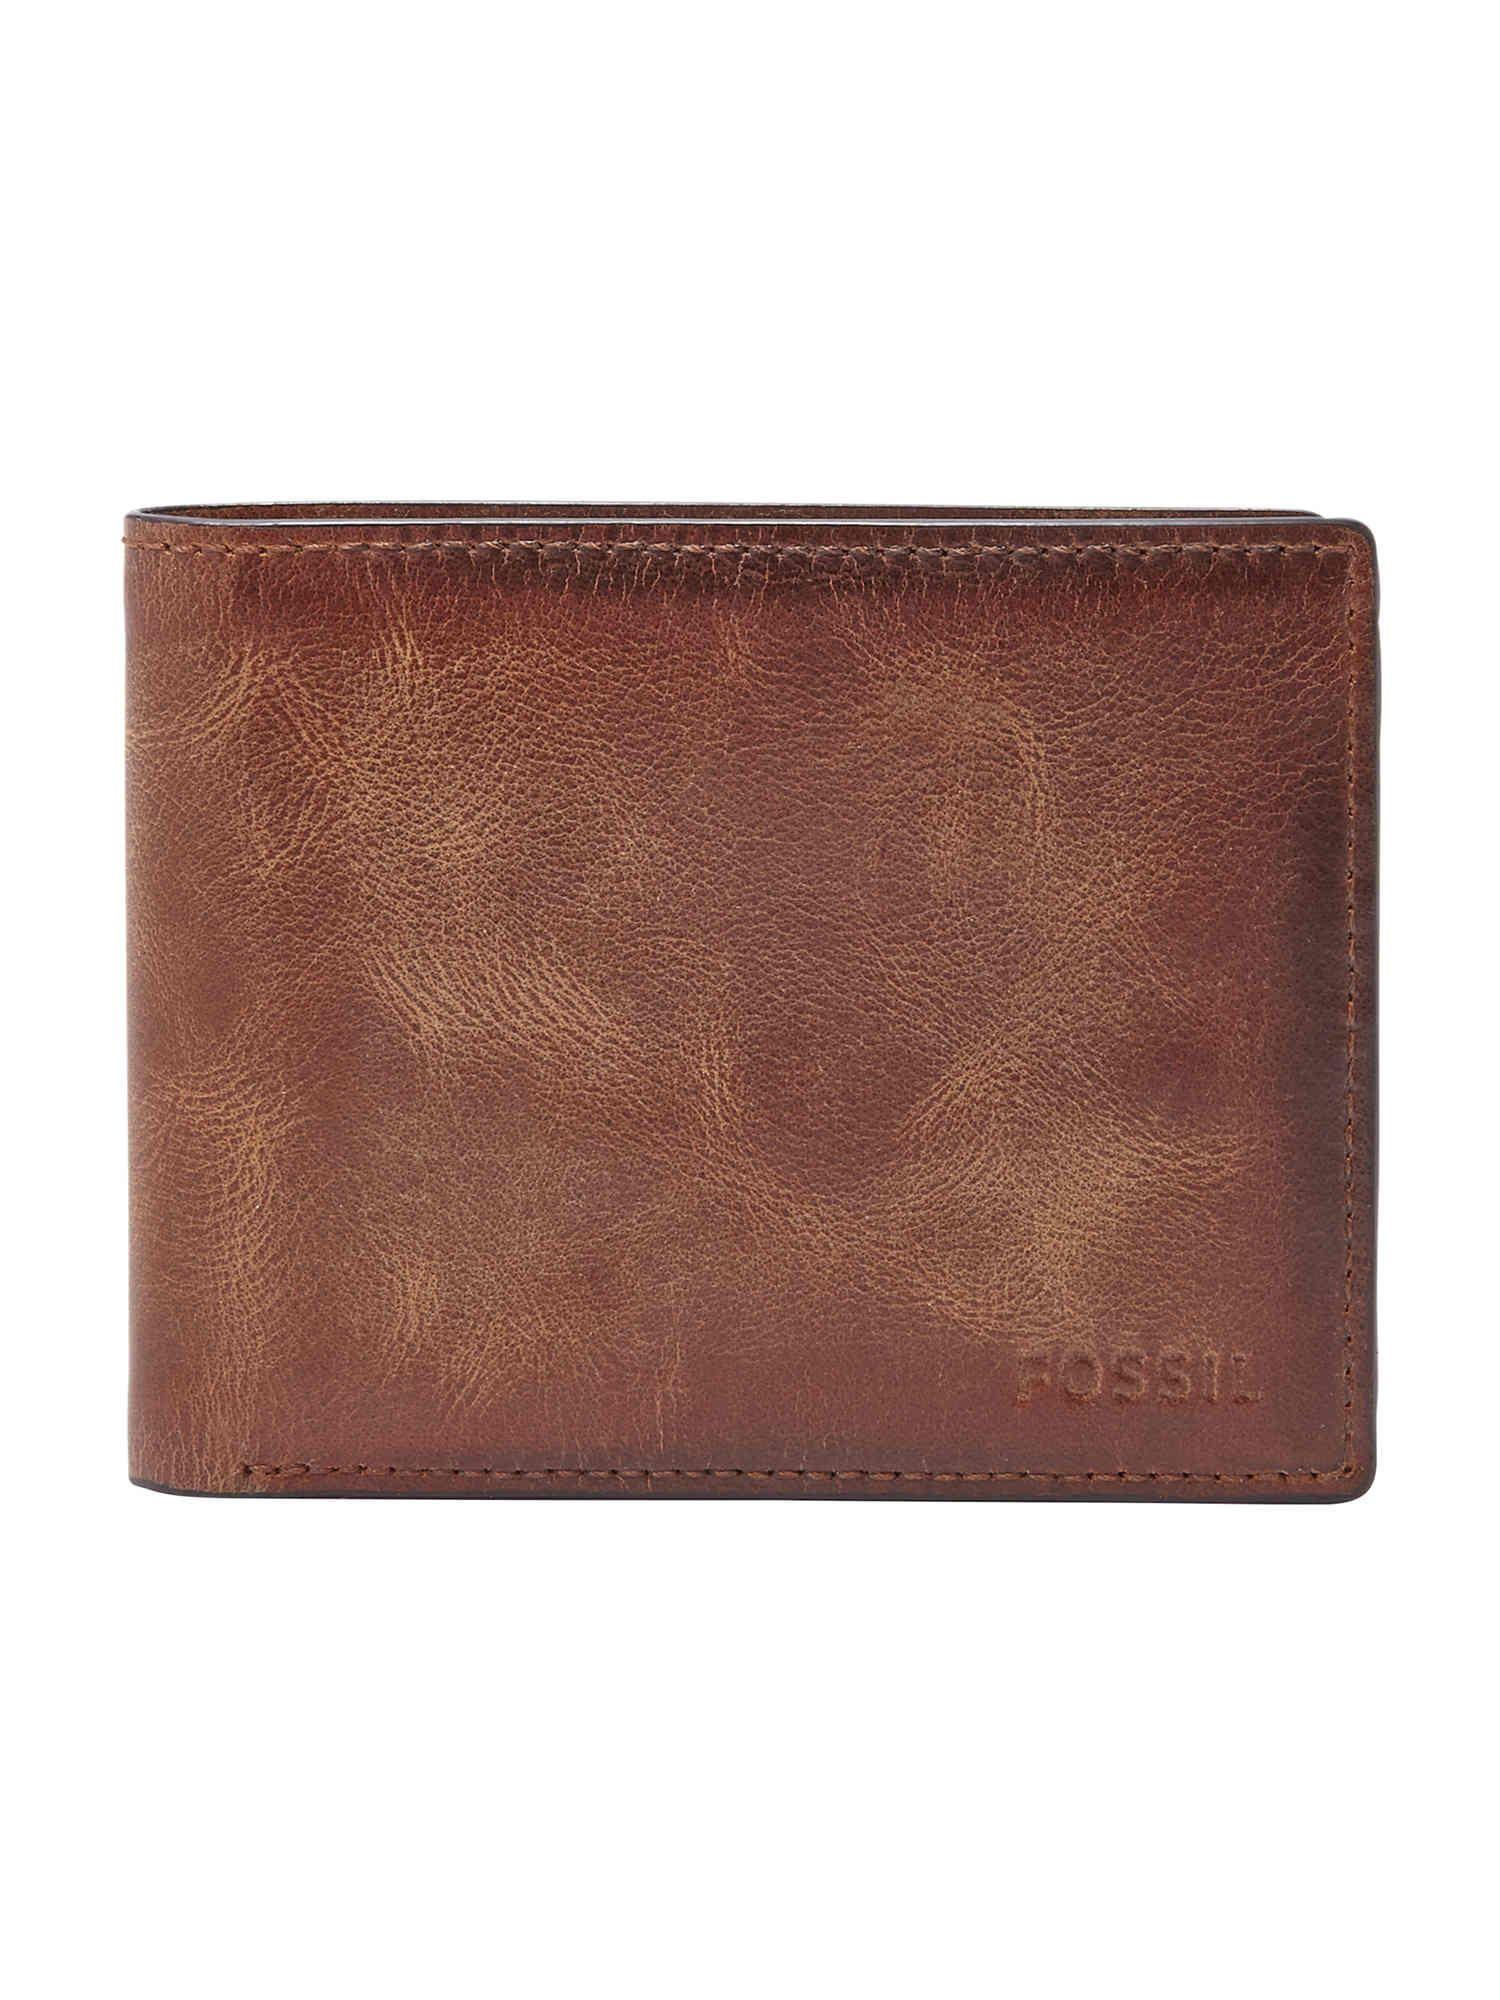 derrick brown wallet ml3681200